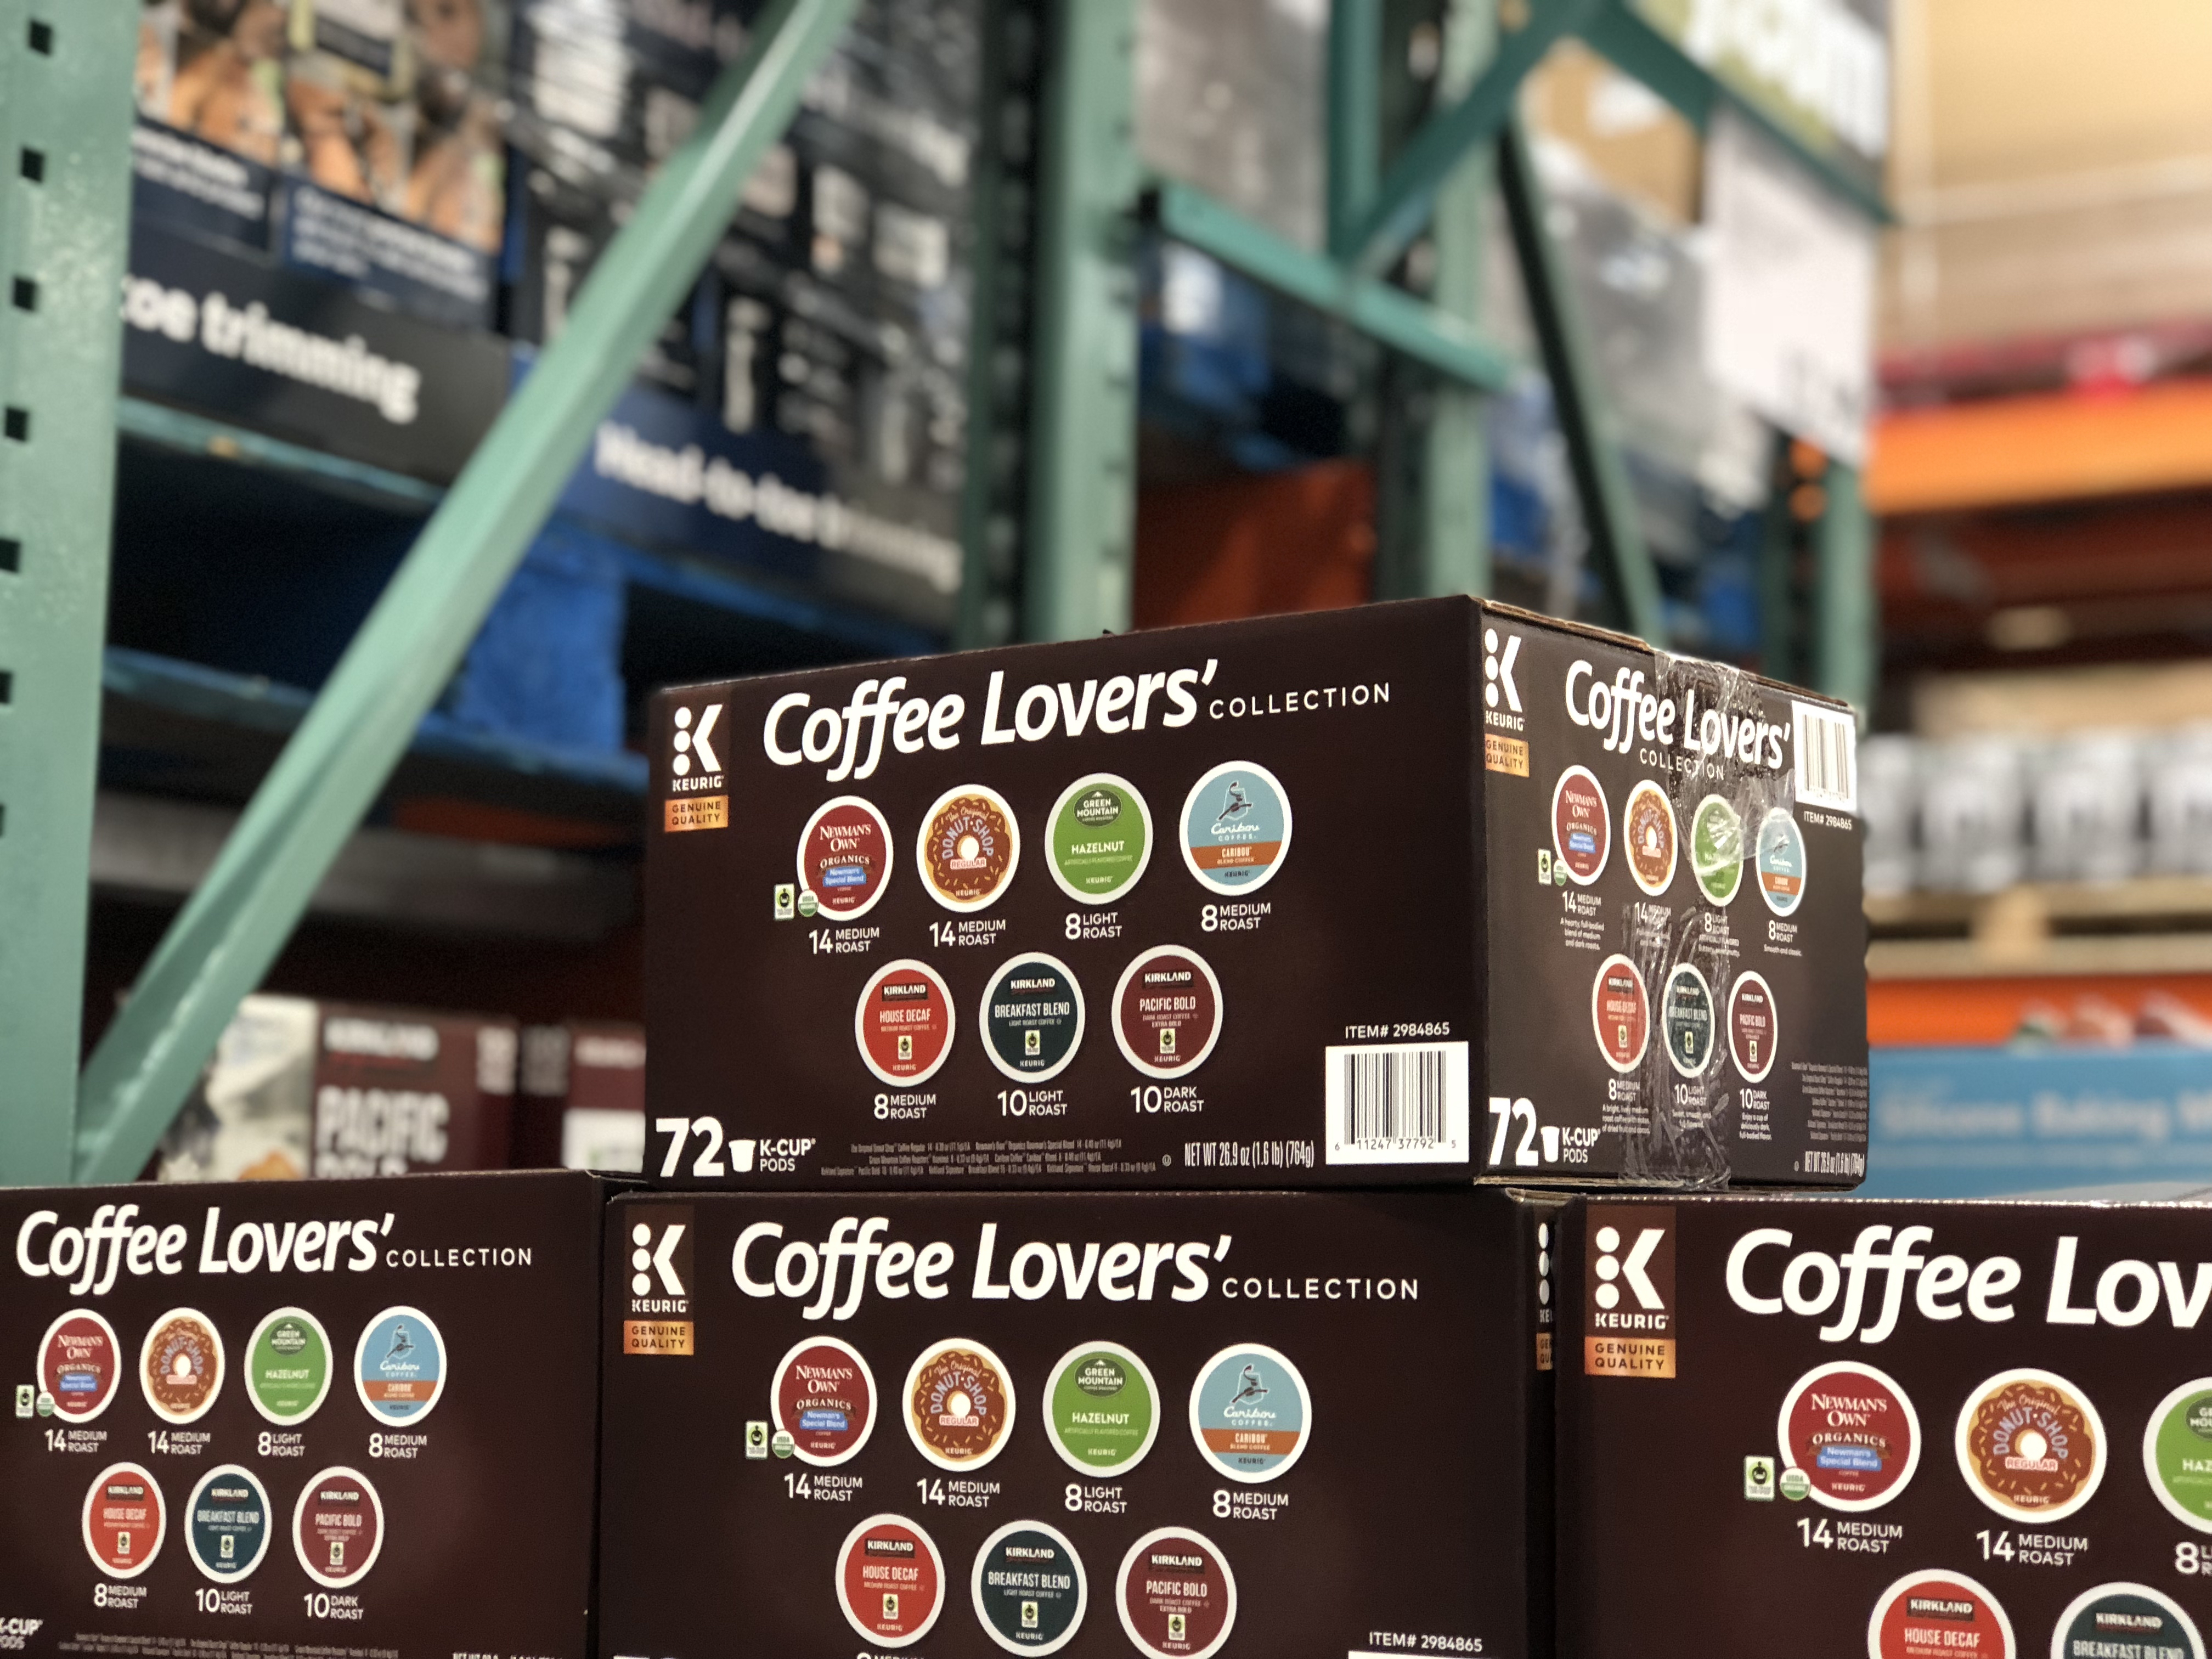 Costco deals October 2018 – Coffee Lovers' K-Cups at Costco